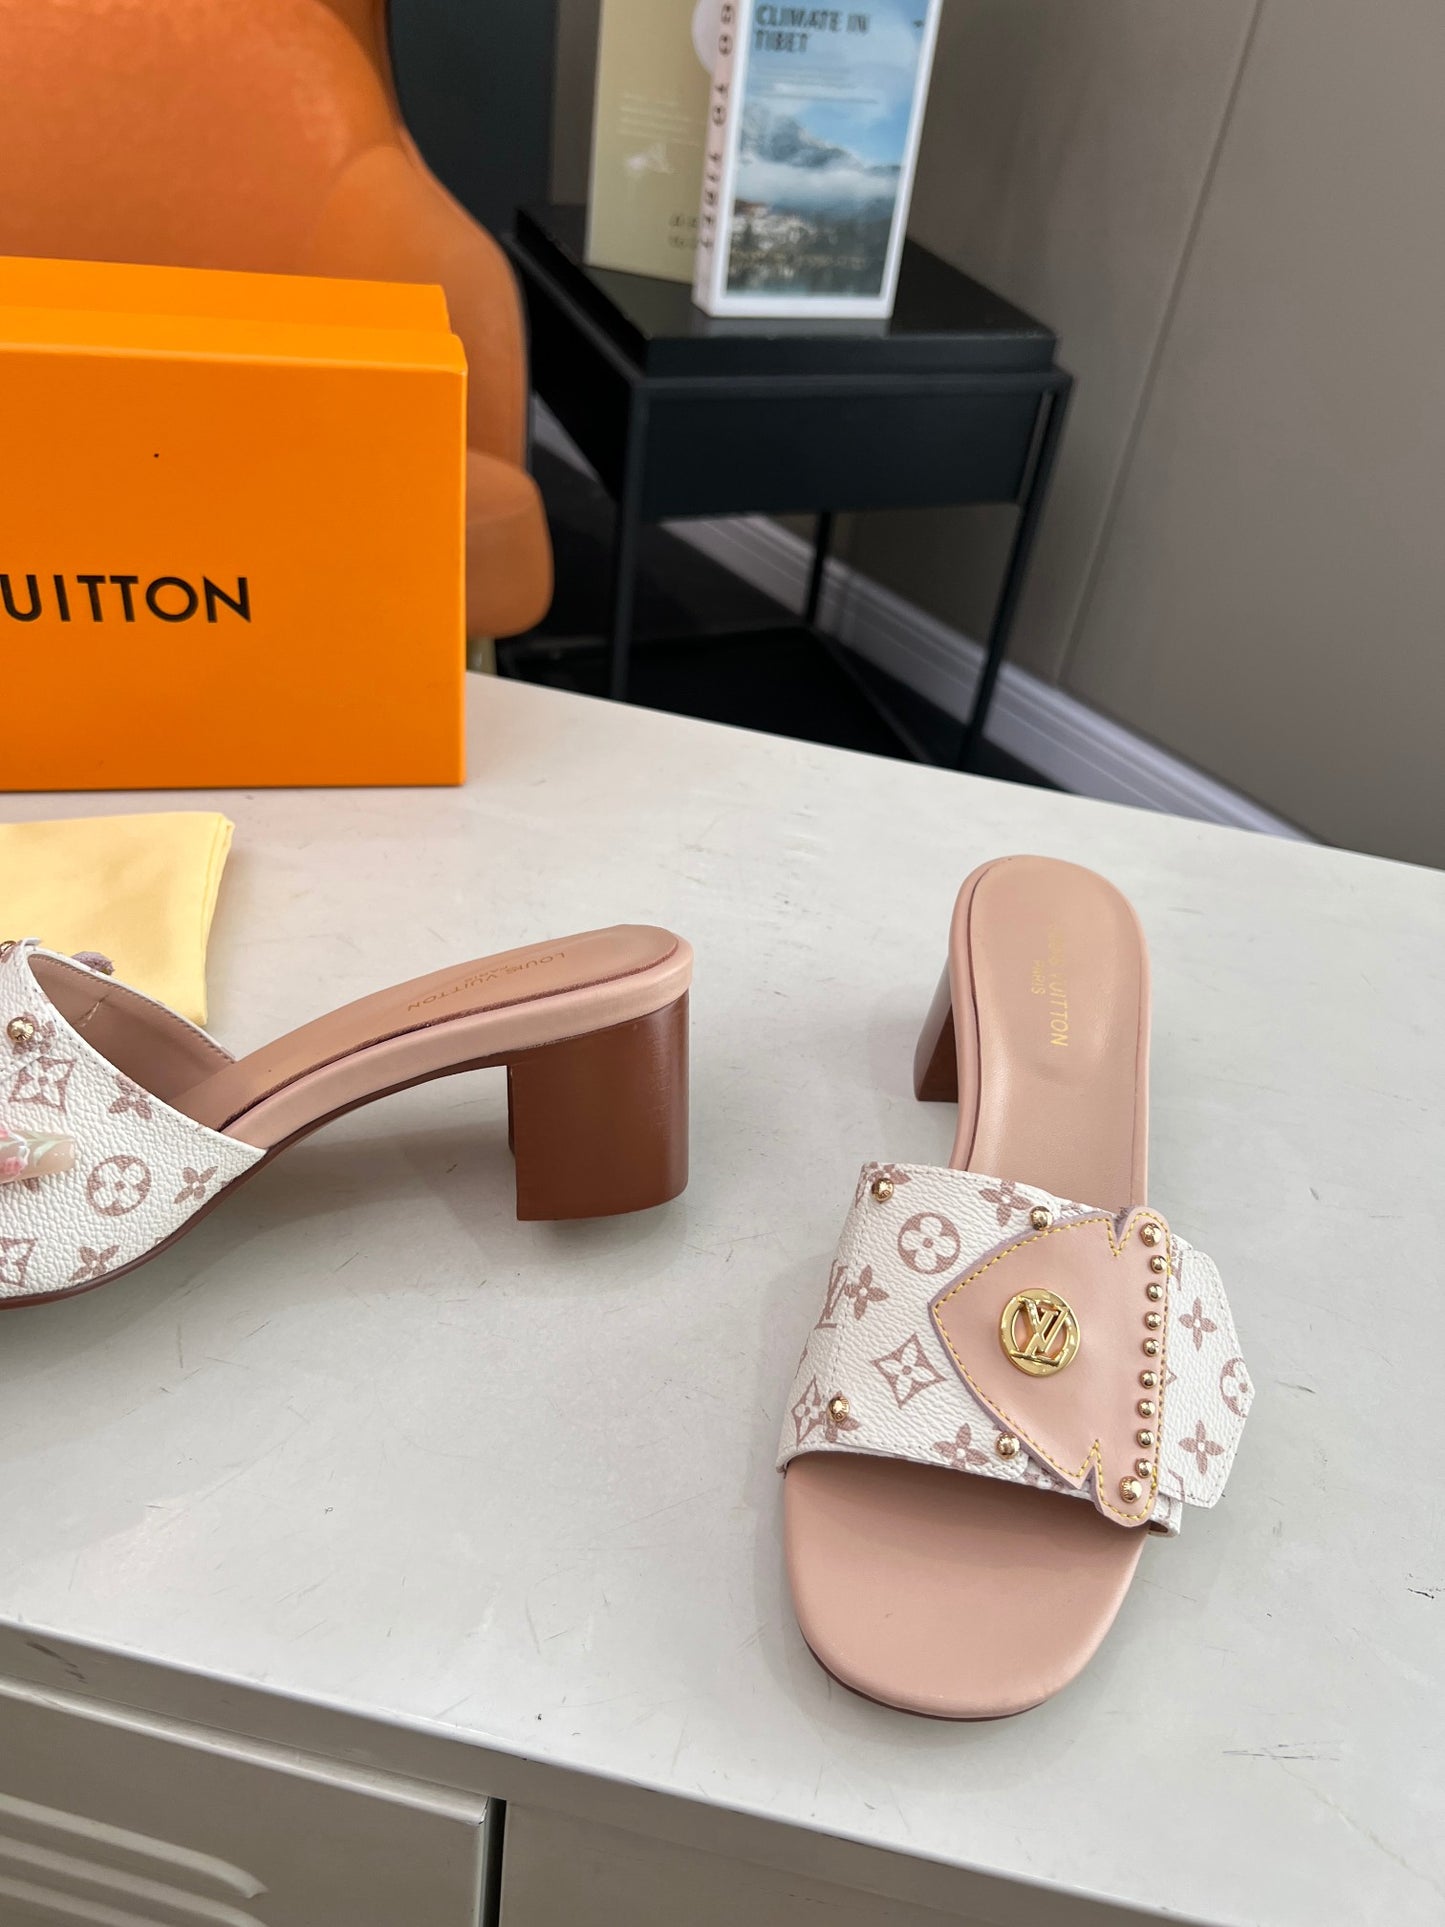 Louis Vuitton Heels Sandal